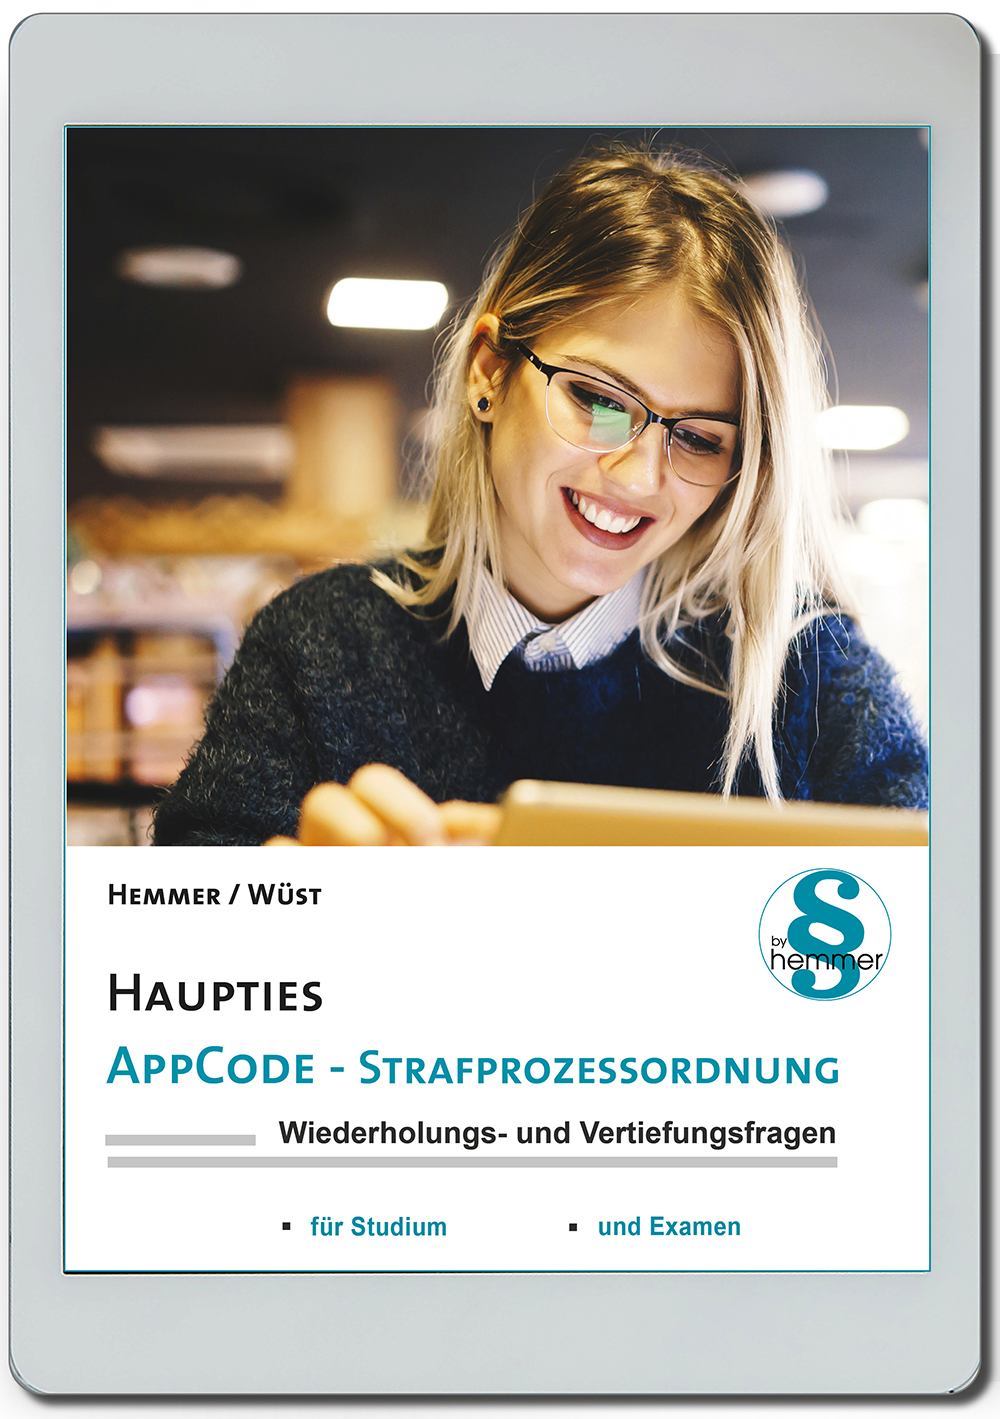 AppCode - haupties - Strafprozessordnung (StPO)